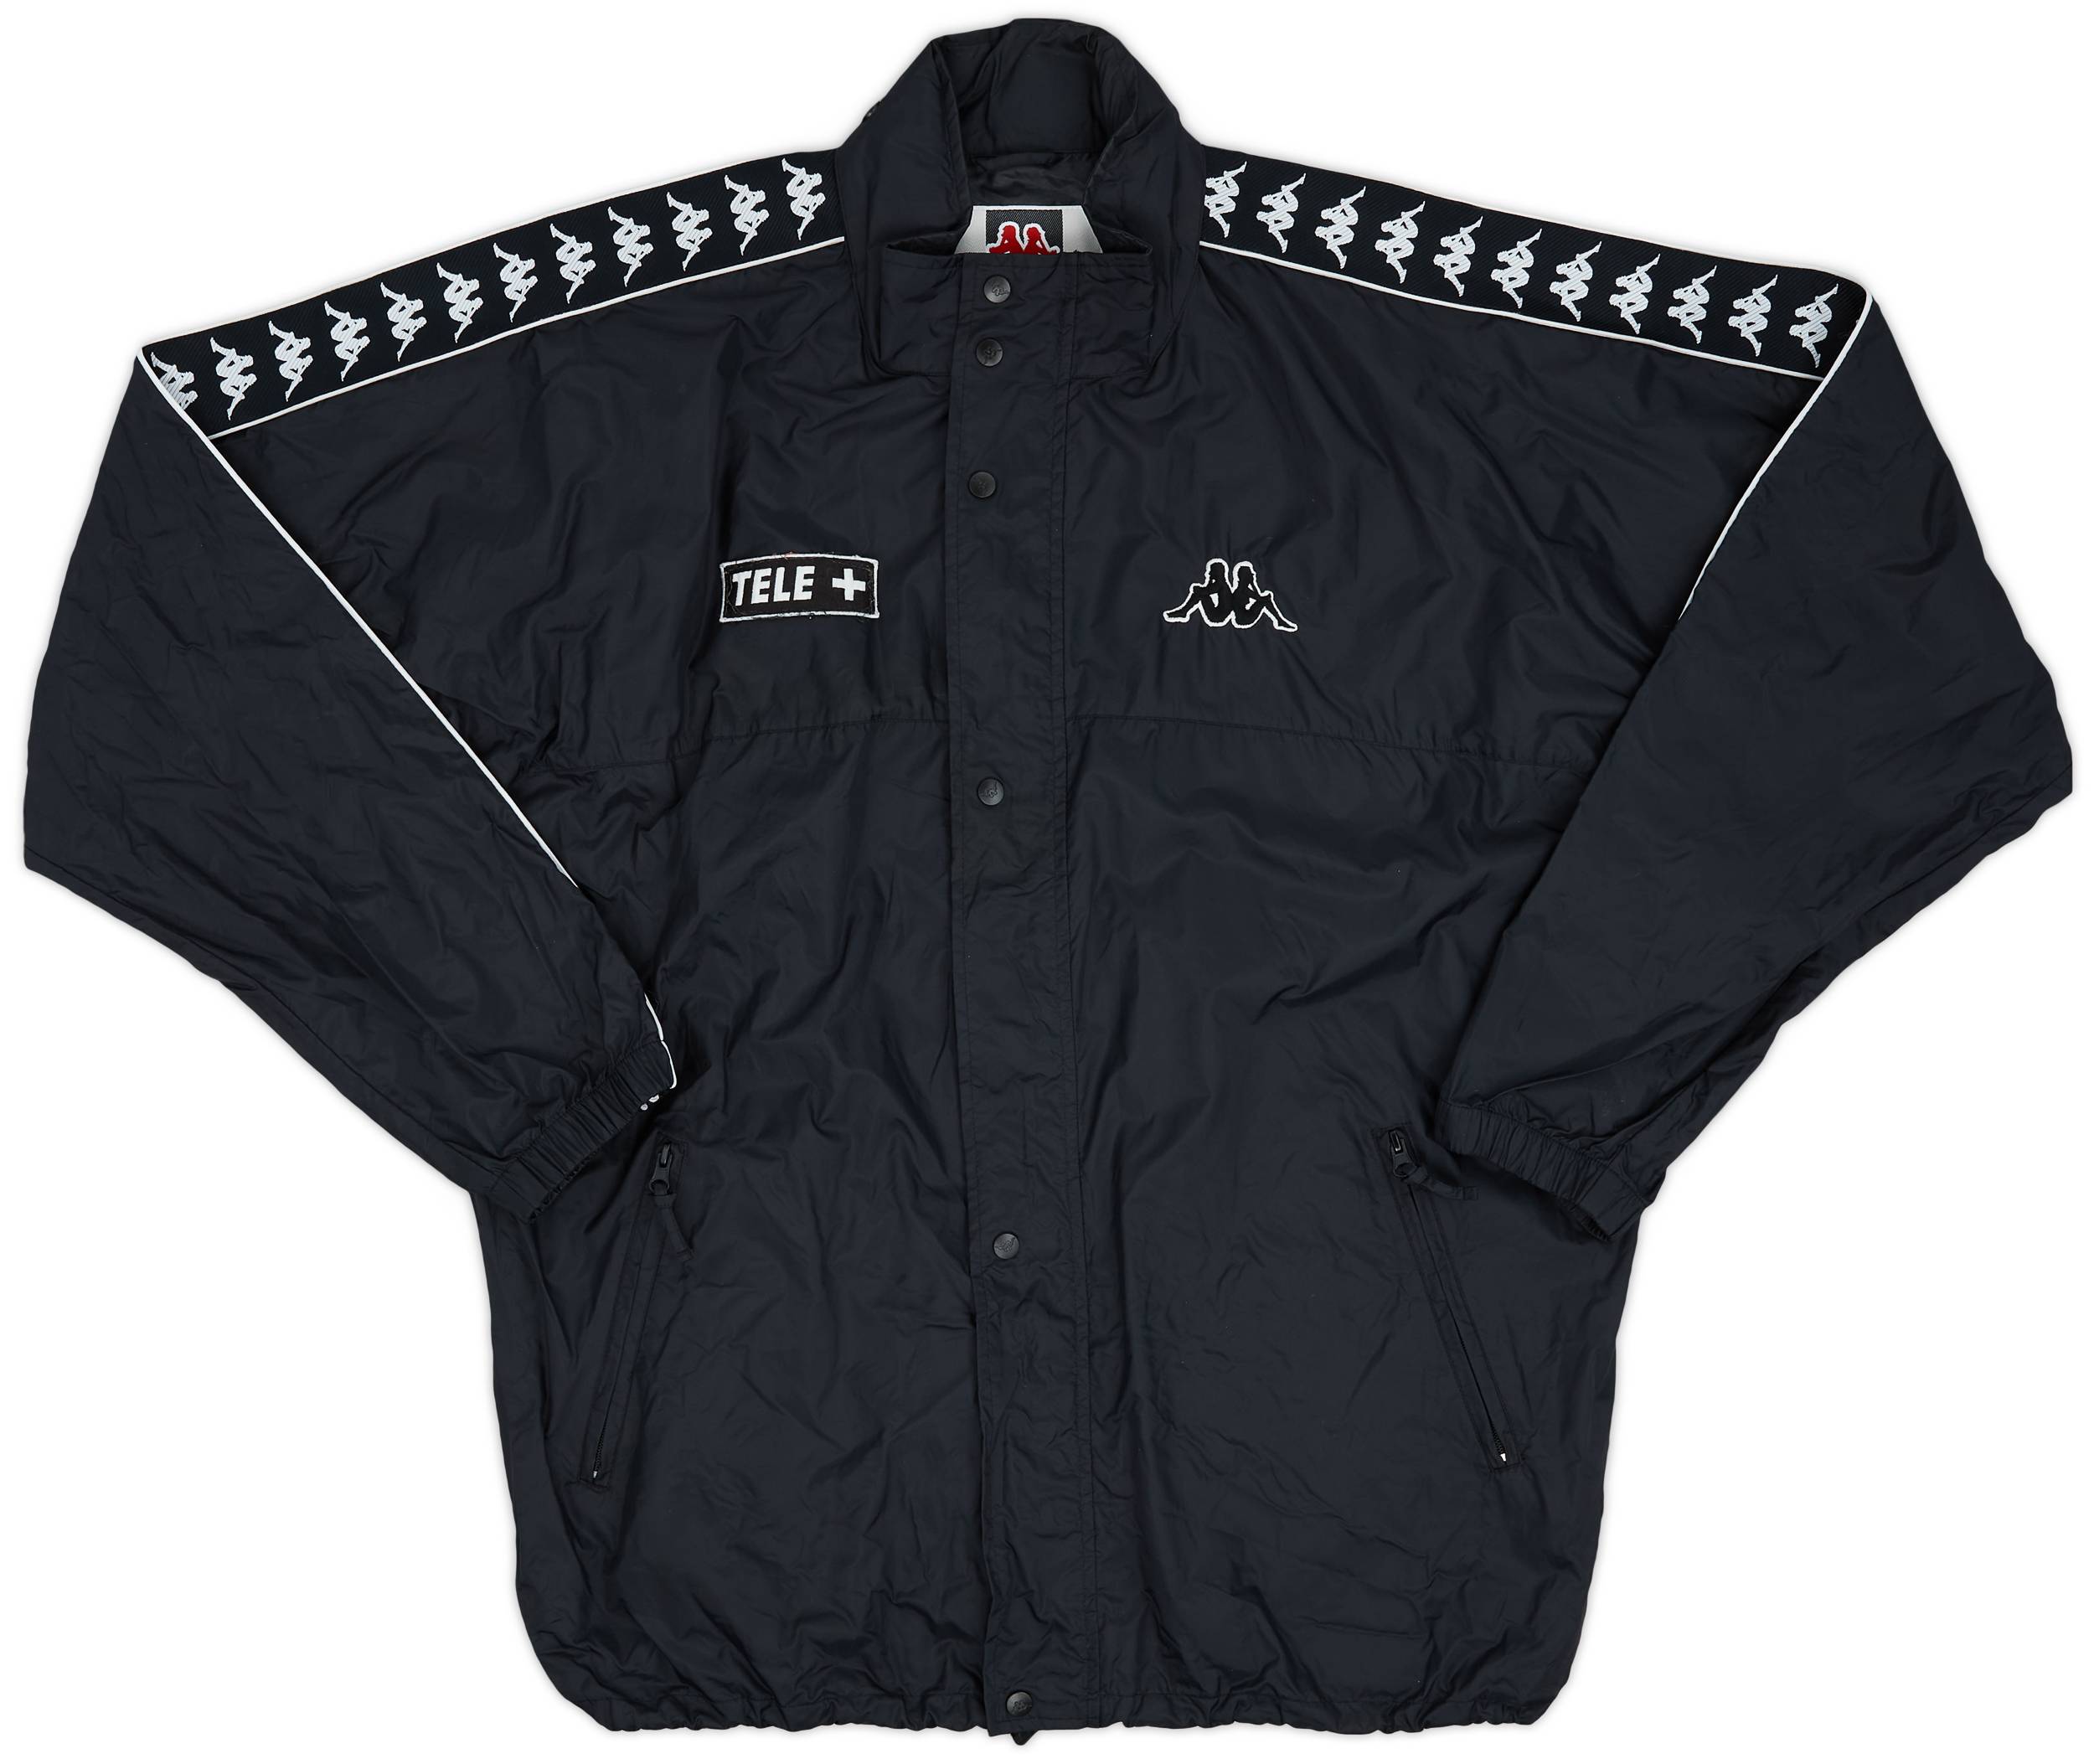 1990s Kappa Track Jacket (Juventus) - 8/10 - (XXL)